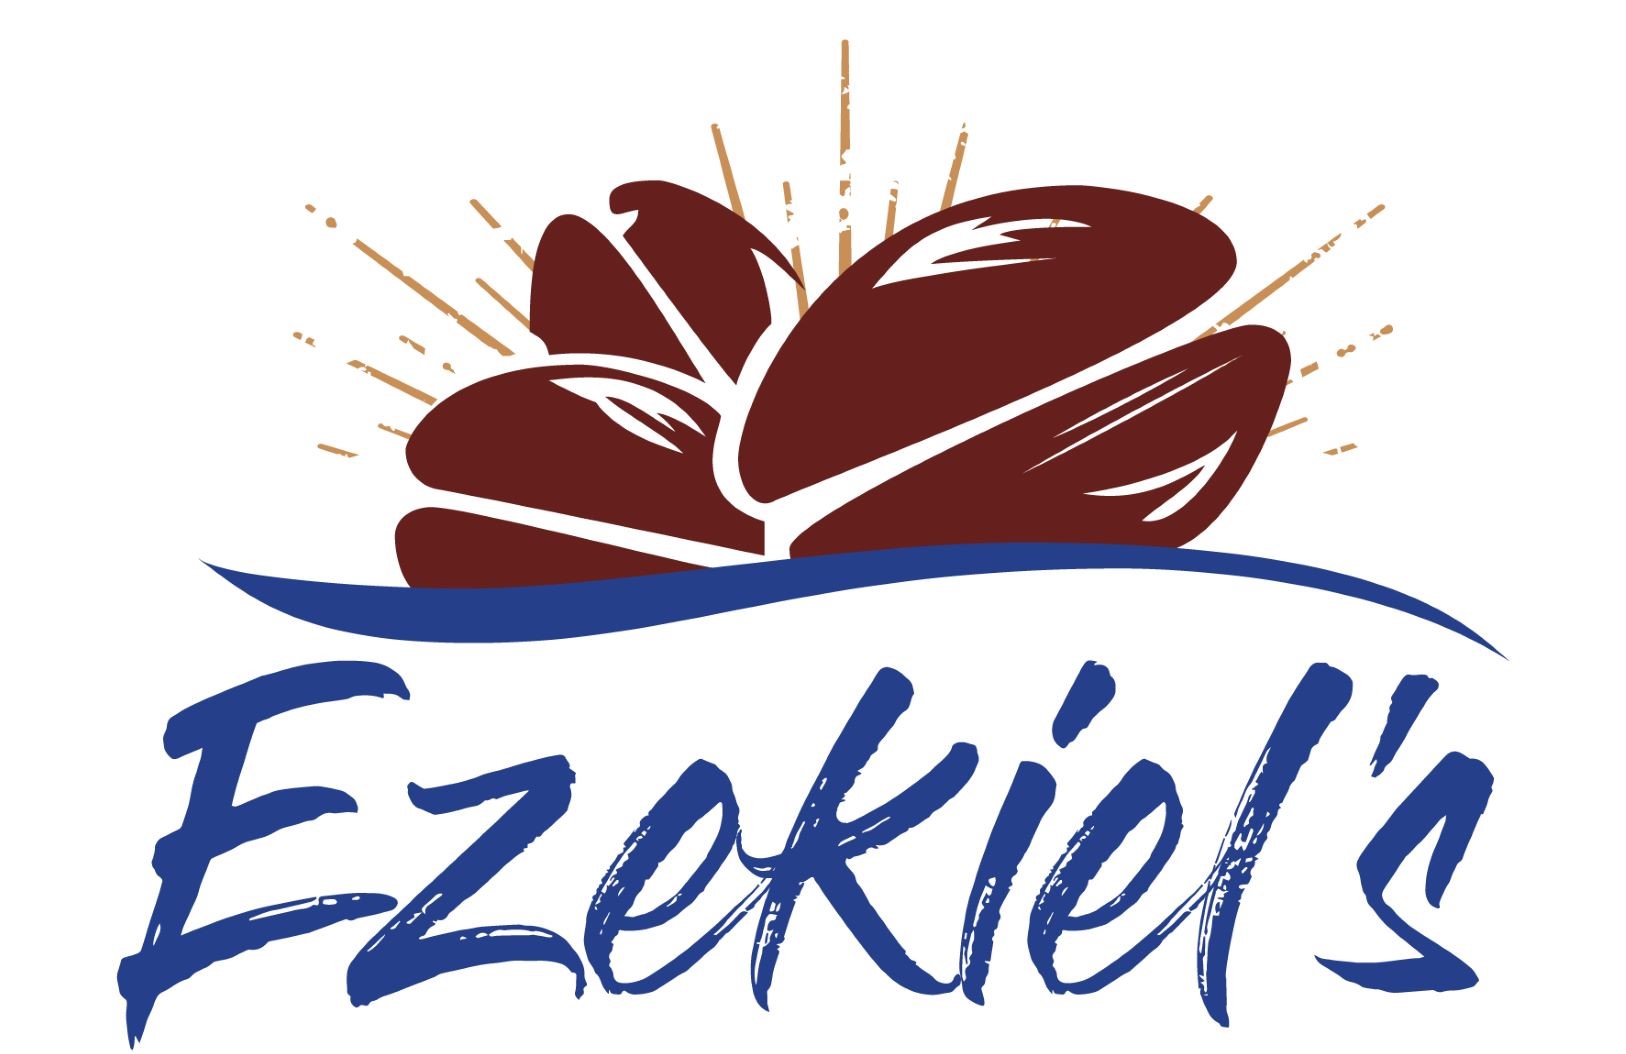 Ezekiel's Christian Ministries